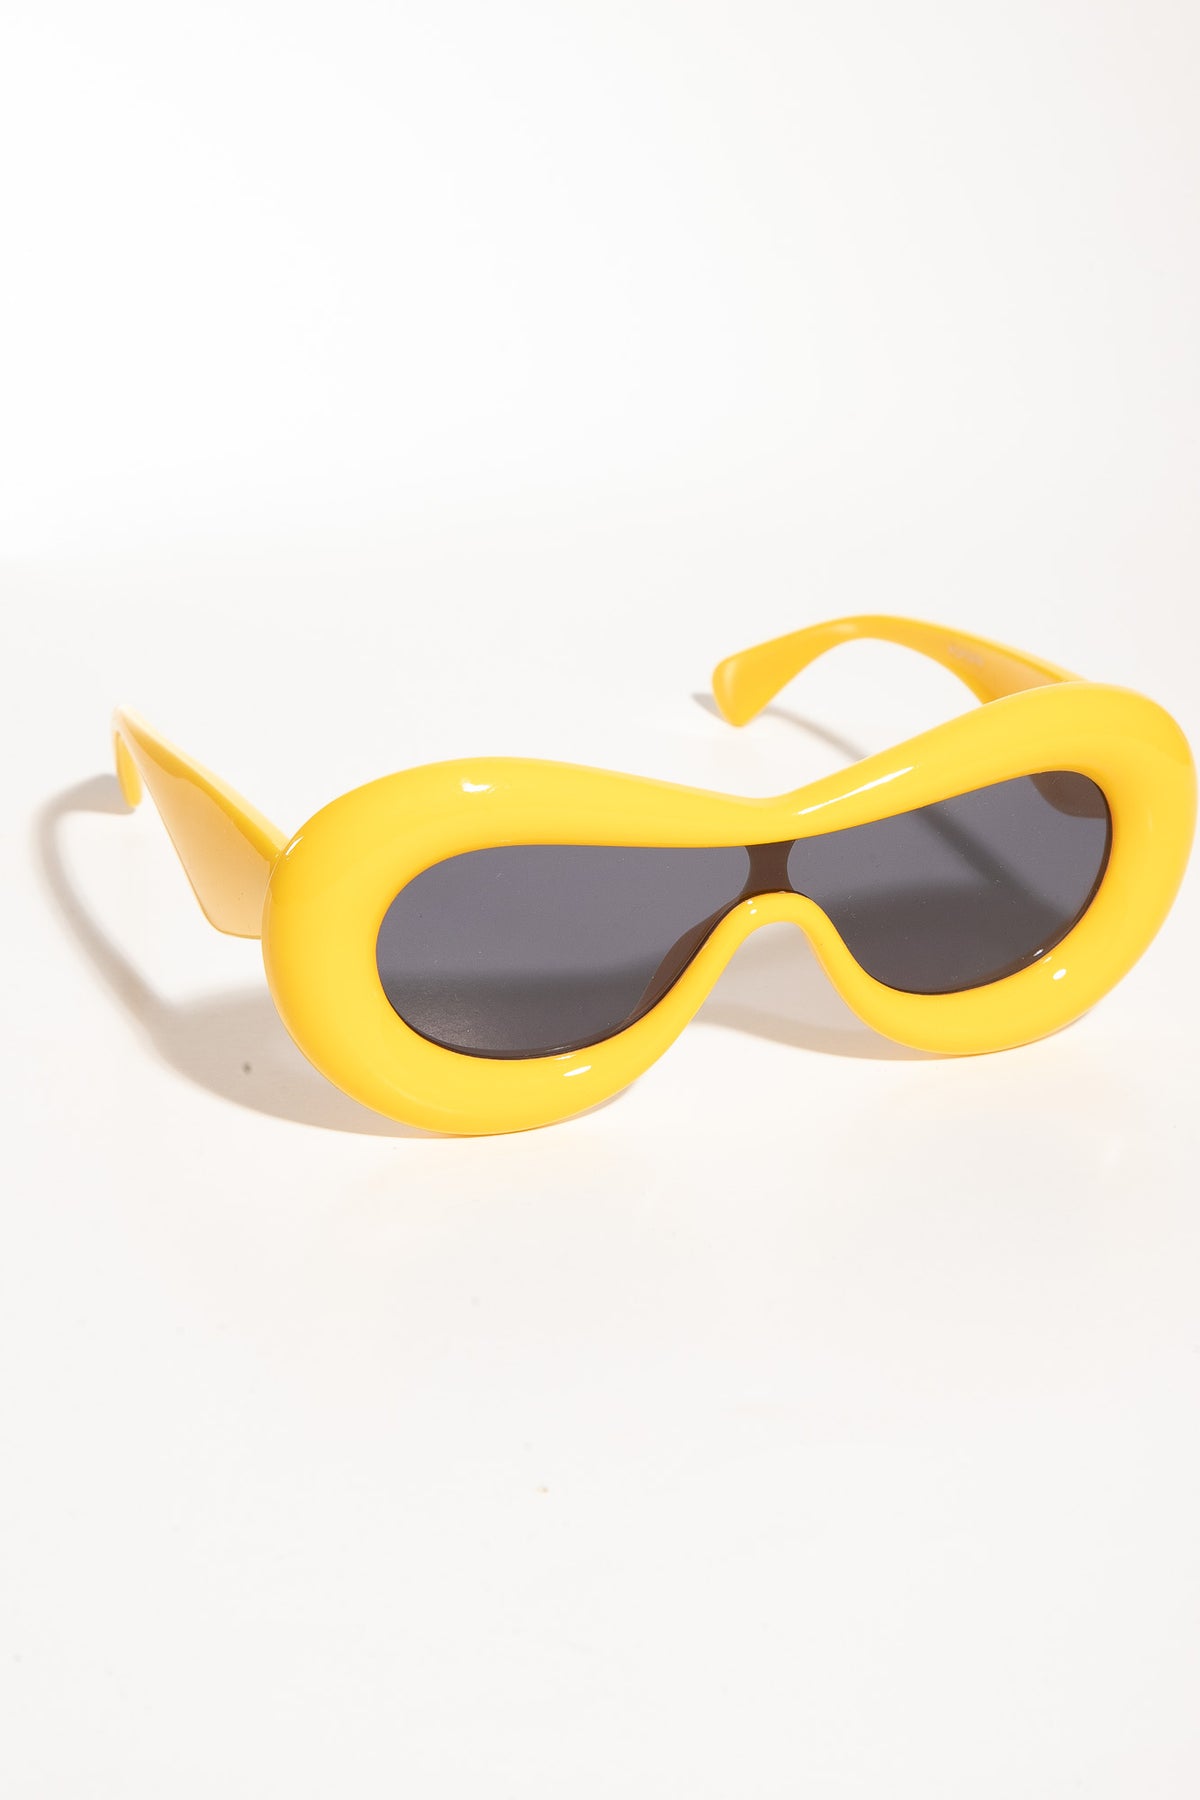 
              Look Alike Retro Framed Sunglasses - Yellow - Swank A Posh
            